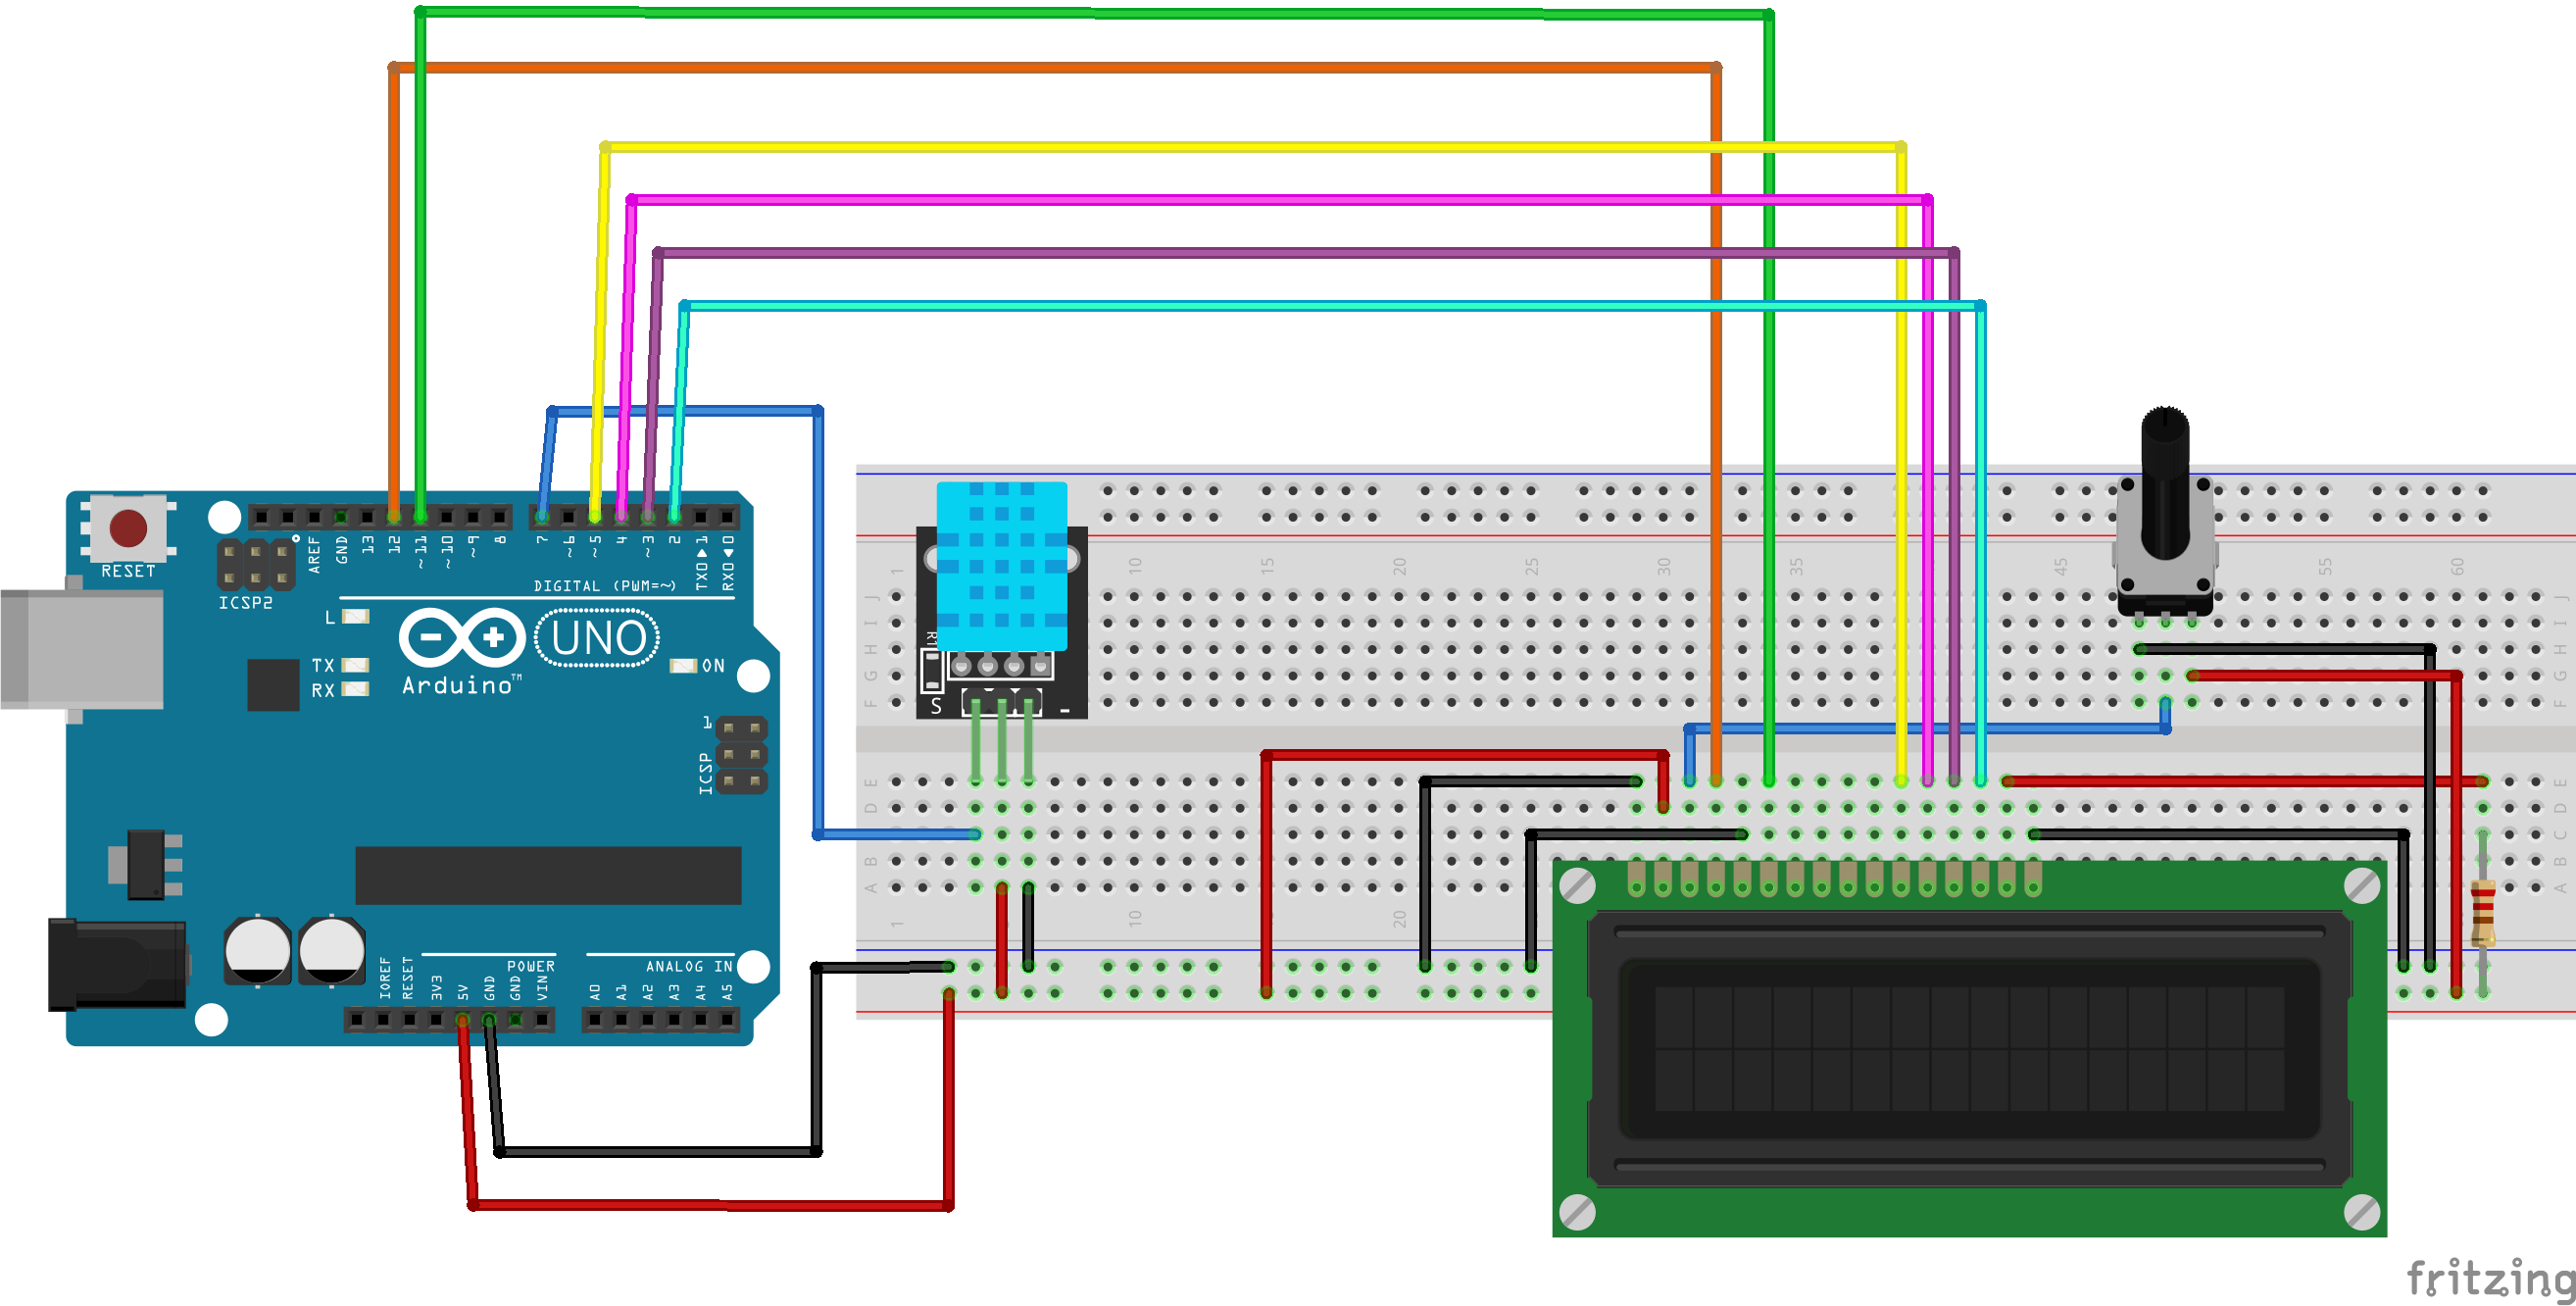 http://ammonshepherd.github.io/arduino-tuts/temp-sensor-lcd-display/DHT11-lcd-circuit.png